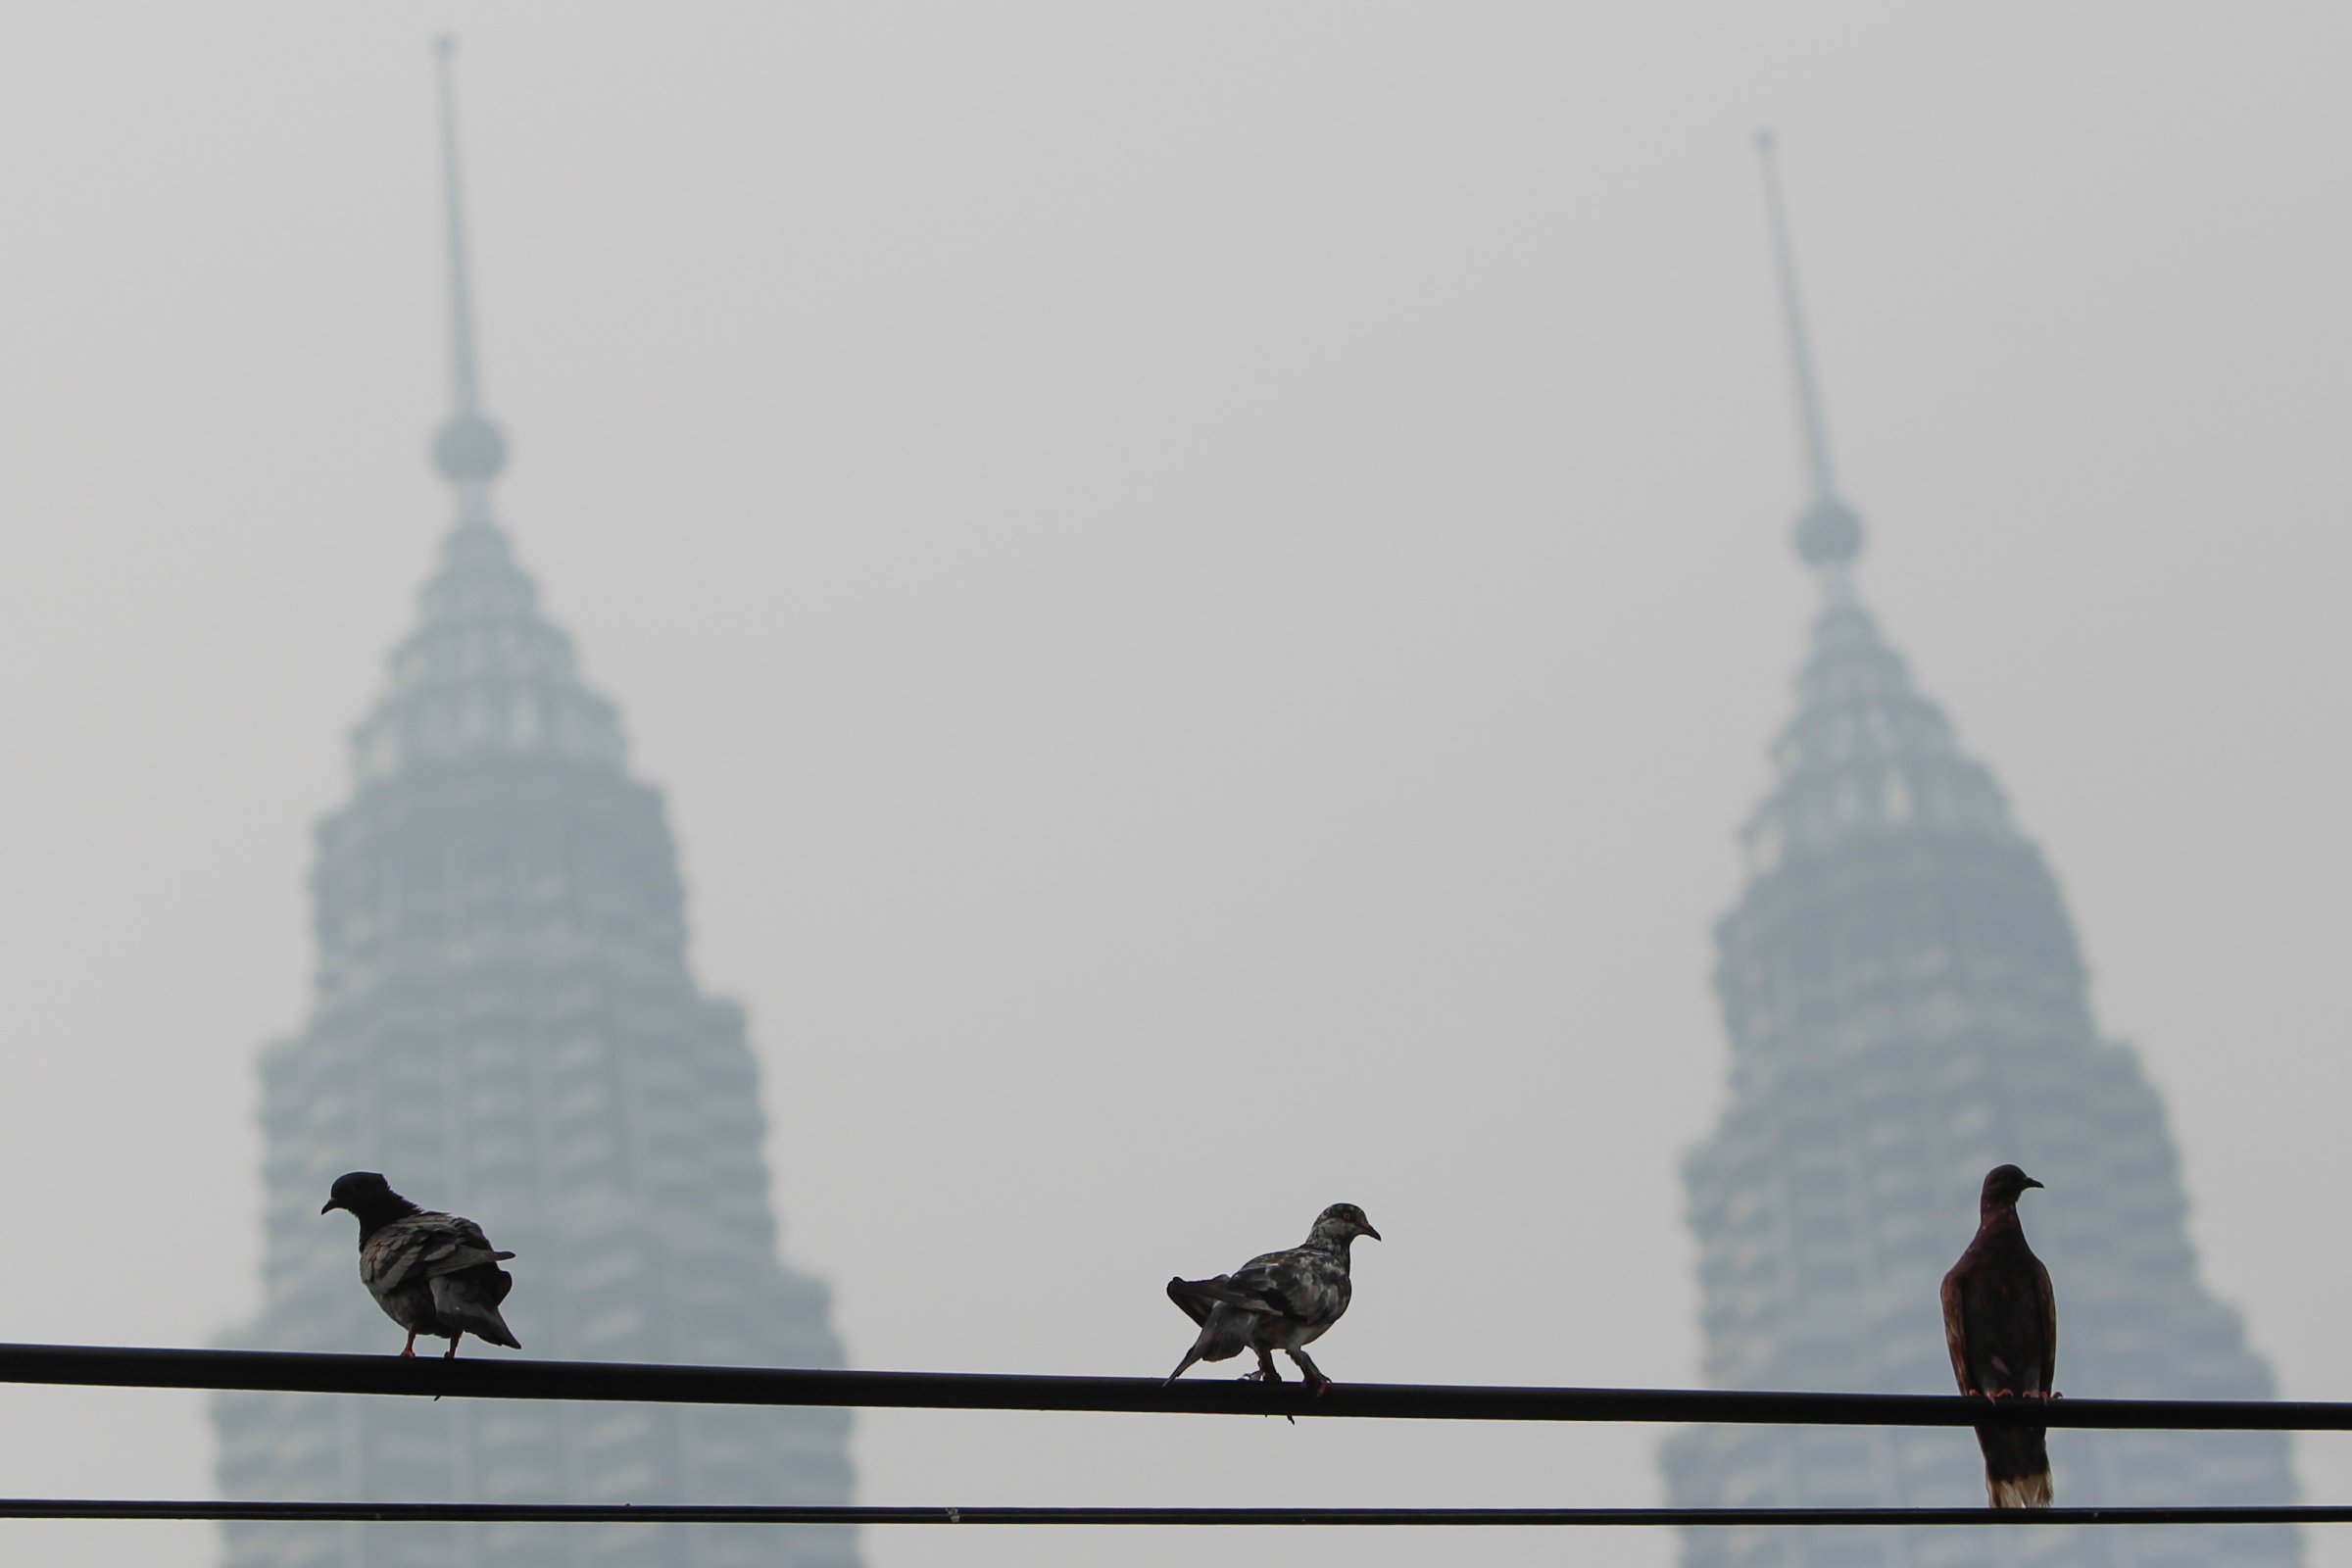 Malaysia Haze